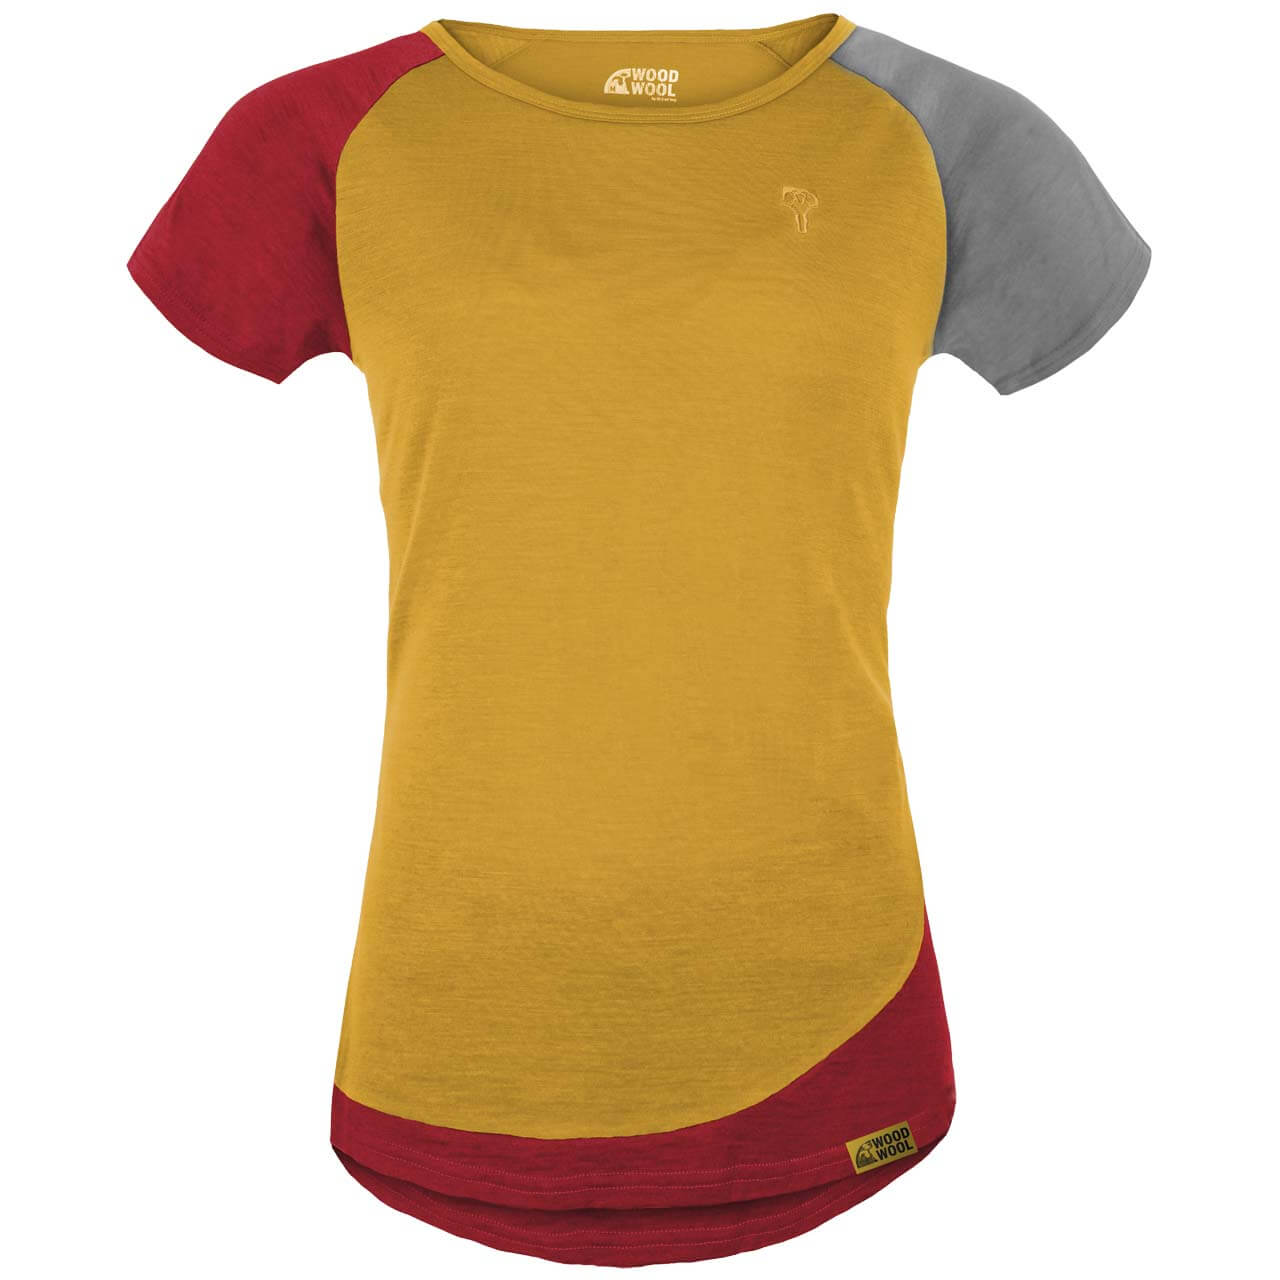 Grüezi Bag WoodWool Janeway T-Shirt - Daisy Daze Yellow, XS von Grüezi Bag